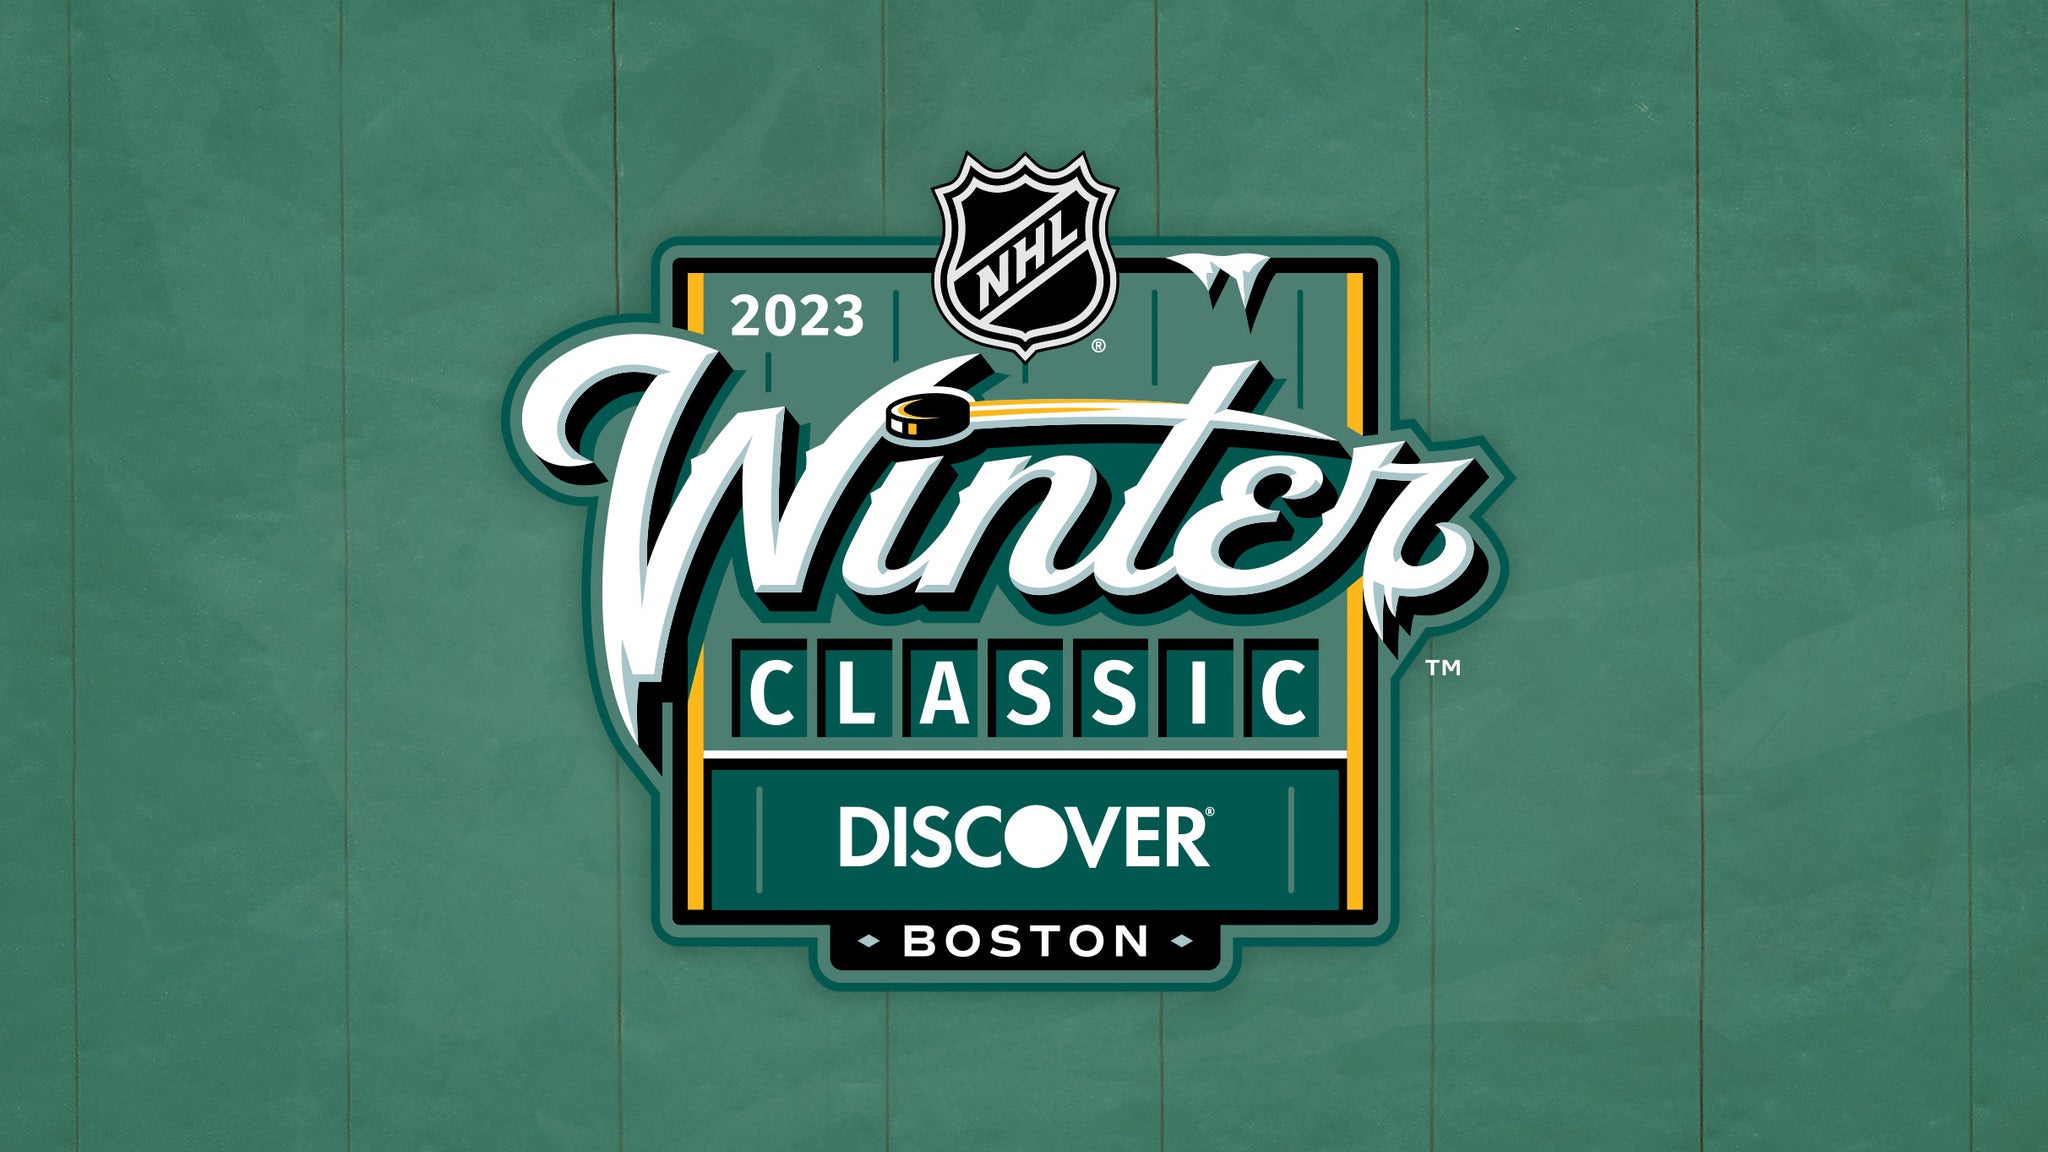 2023 Discover NHL Winter Classic - Pittsburgh Penguins V Boston Bruins in Boston promo photo for NHL Winter Classic presale offer code